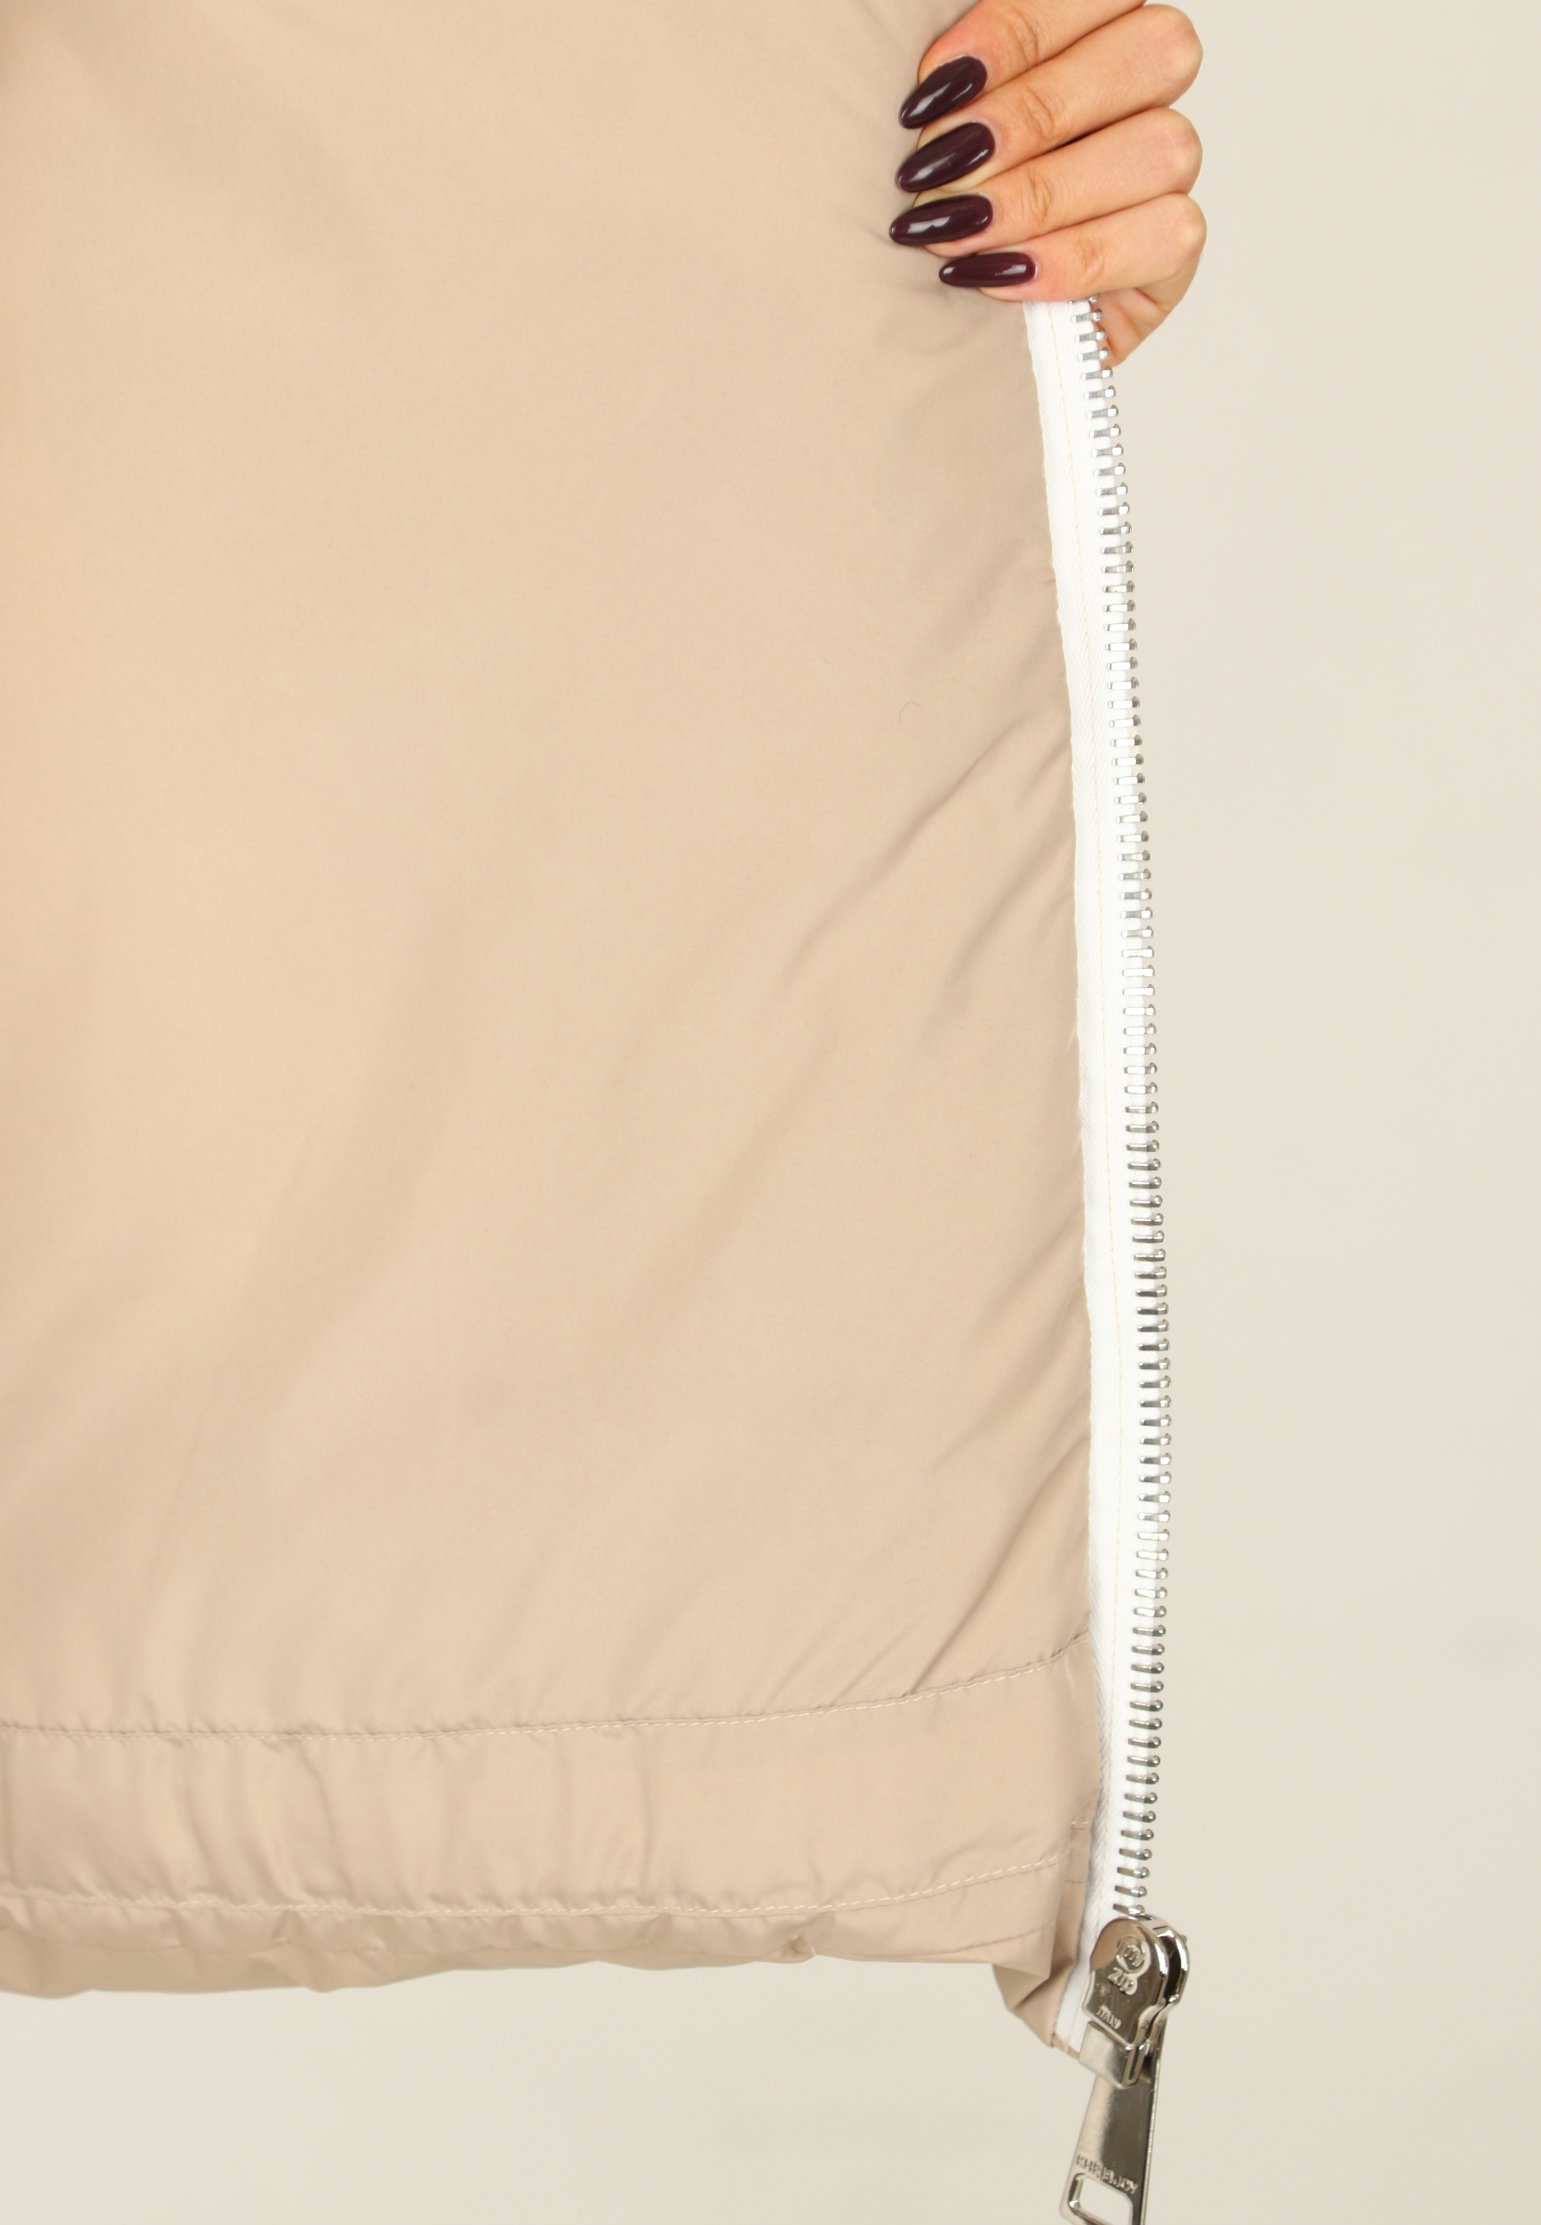 Vest KHRISJOY Color: beige (Code: 1371) in online store Allure